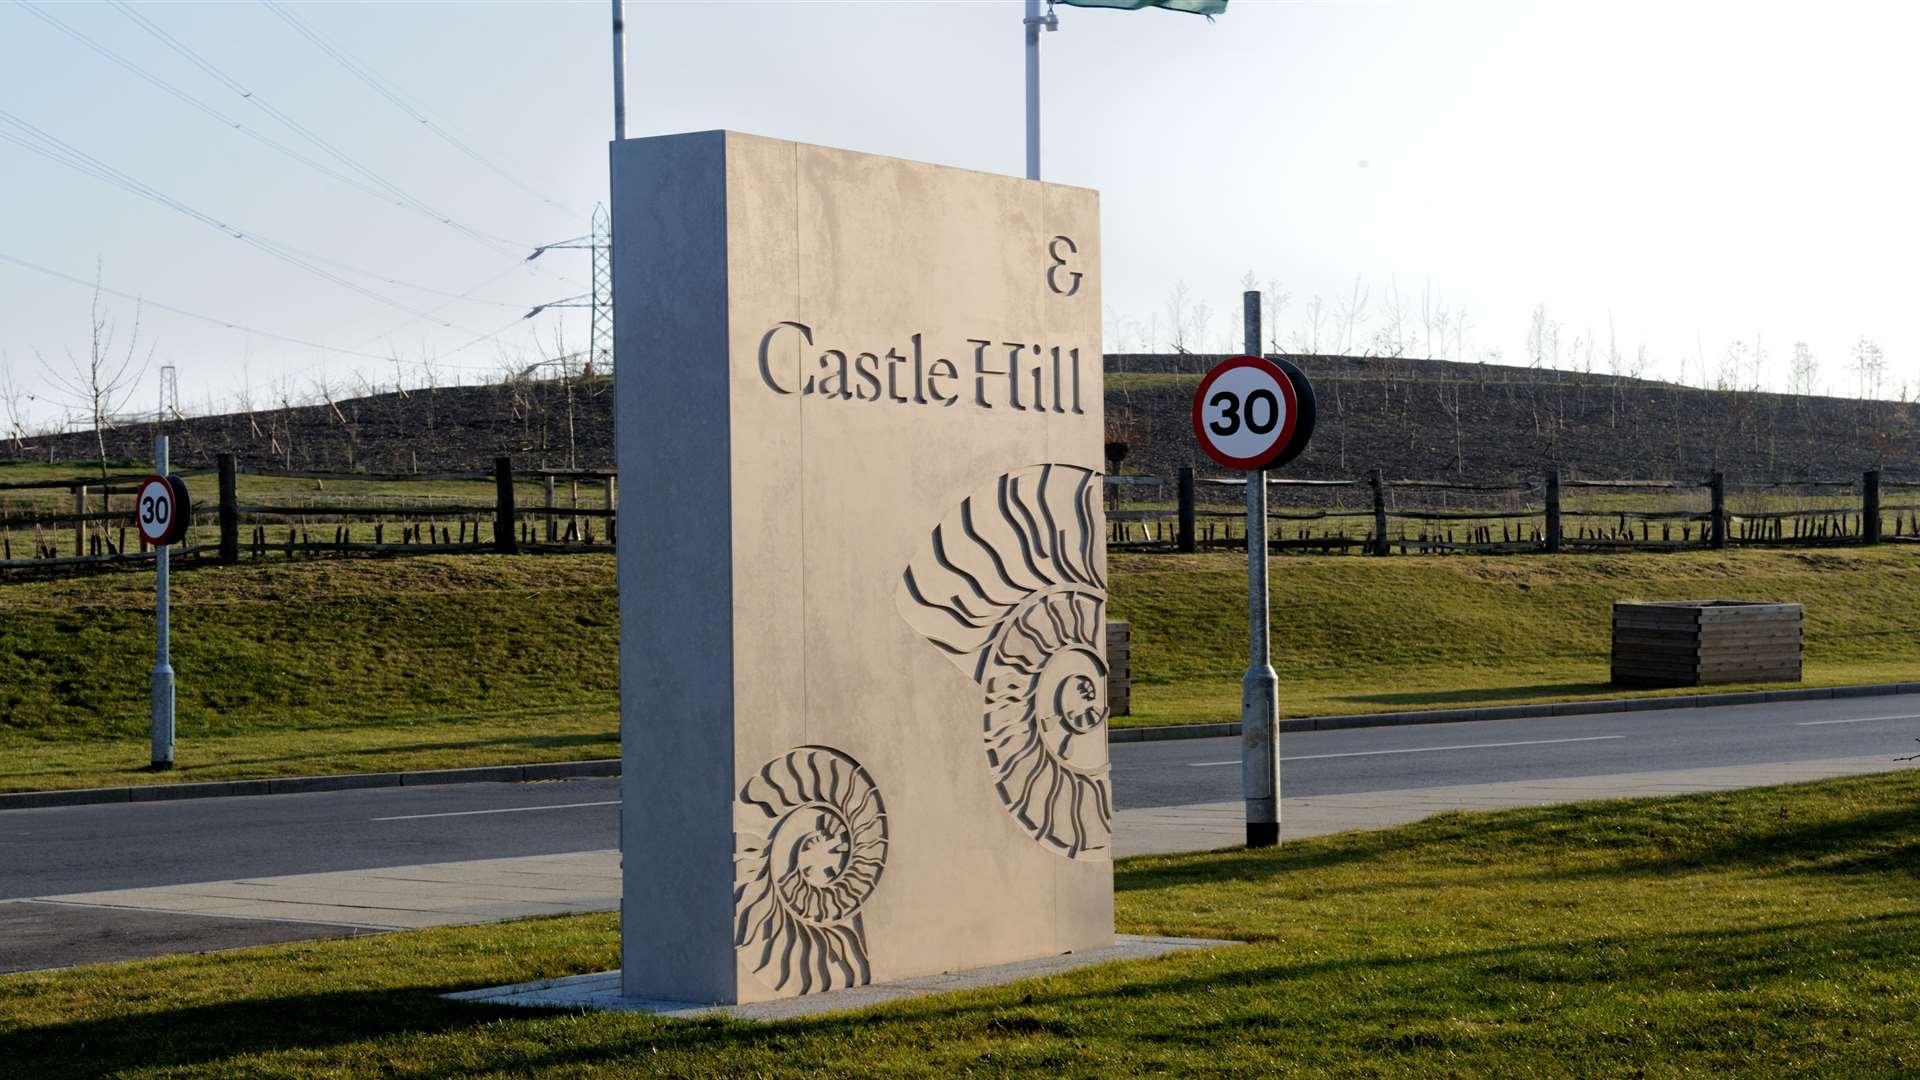 Castle Hill is just one of several housing developments making up Ebbsfleet Garden City